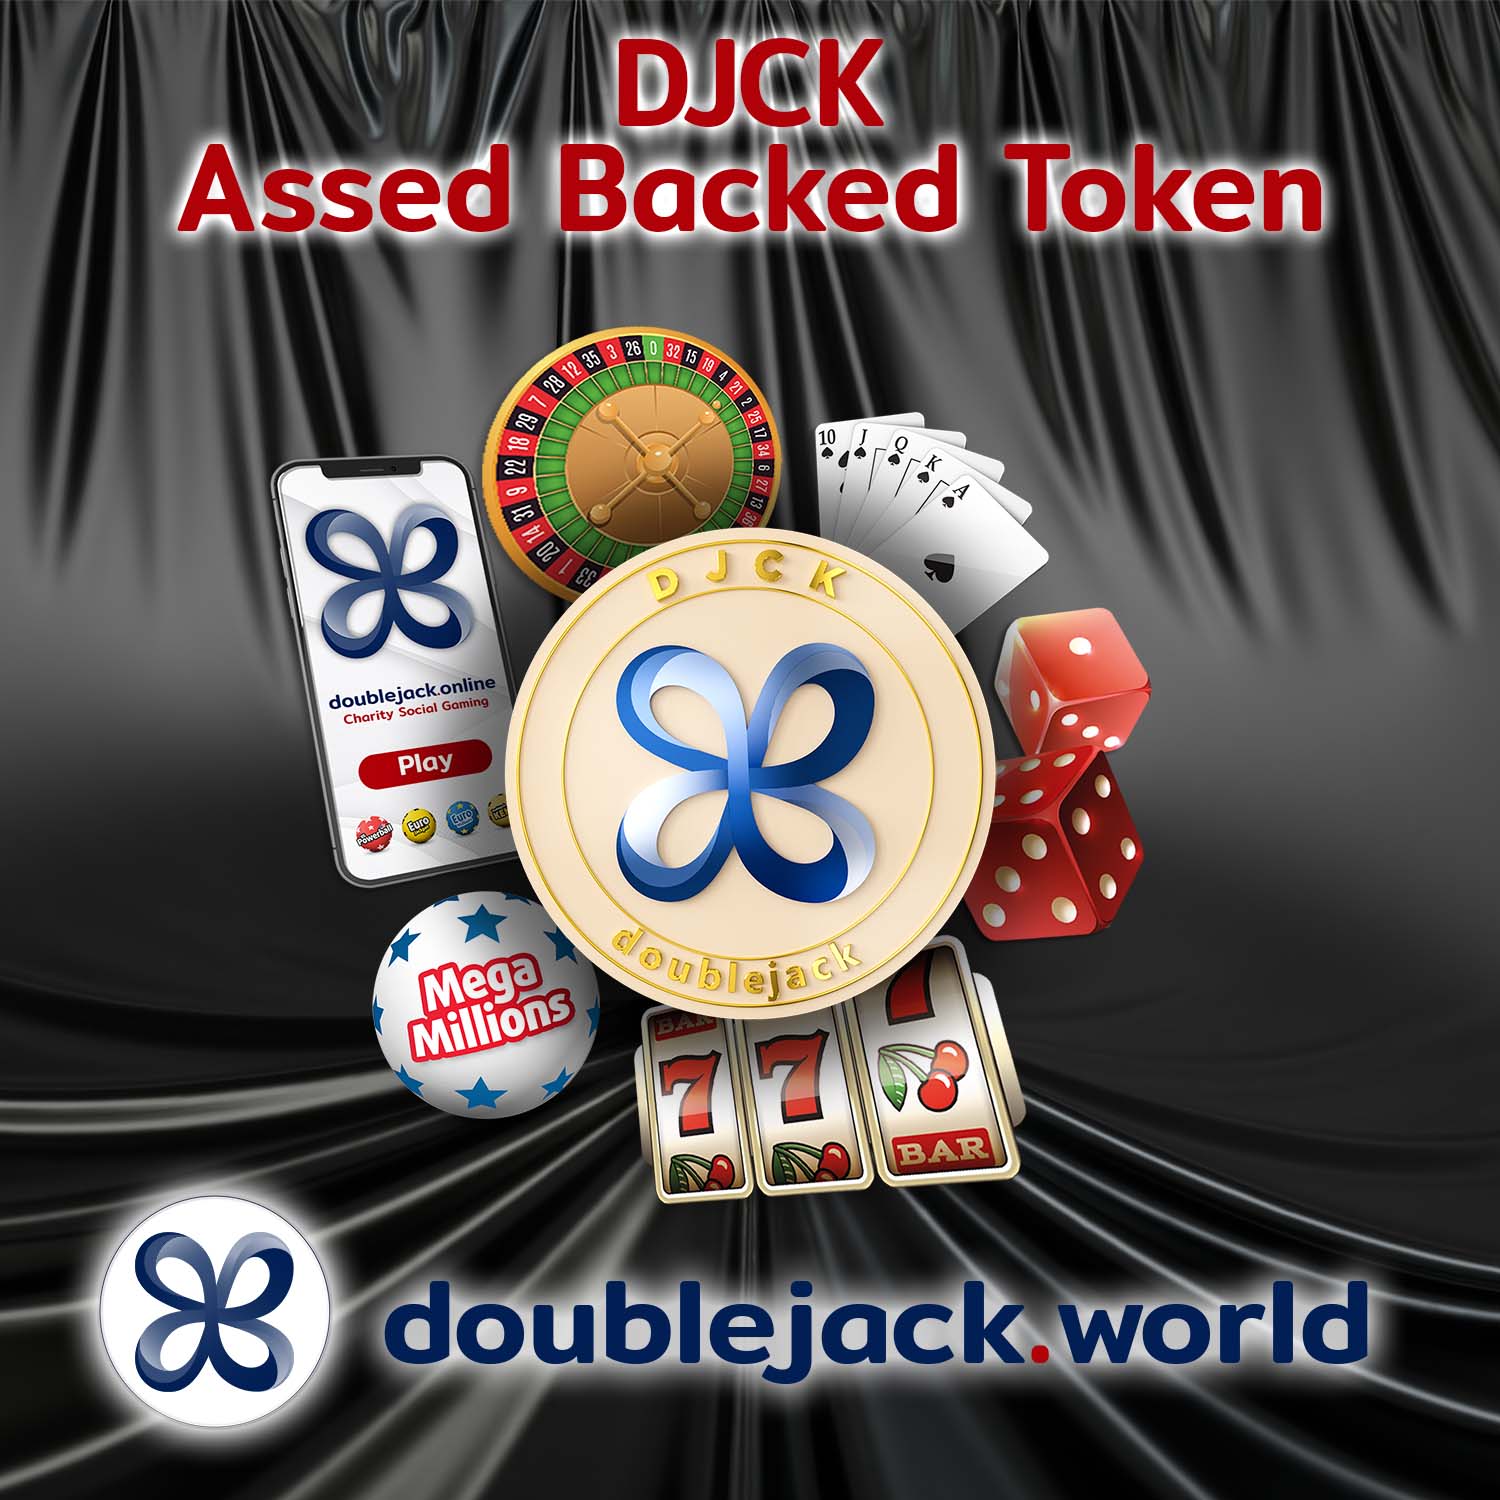 doublejack has launched a digital Token - DJCK